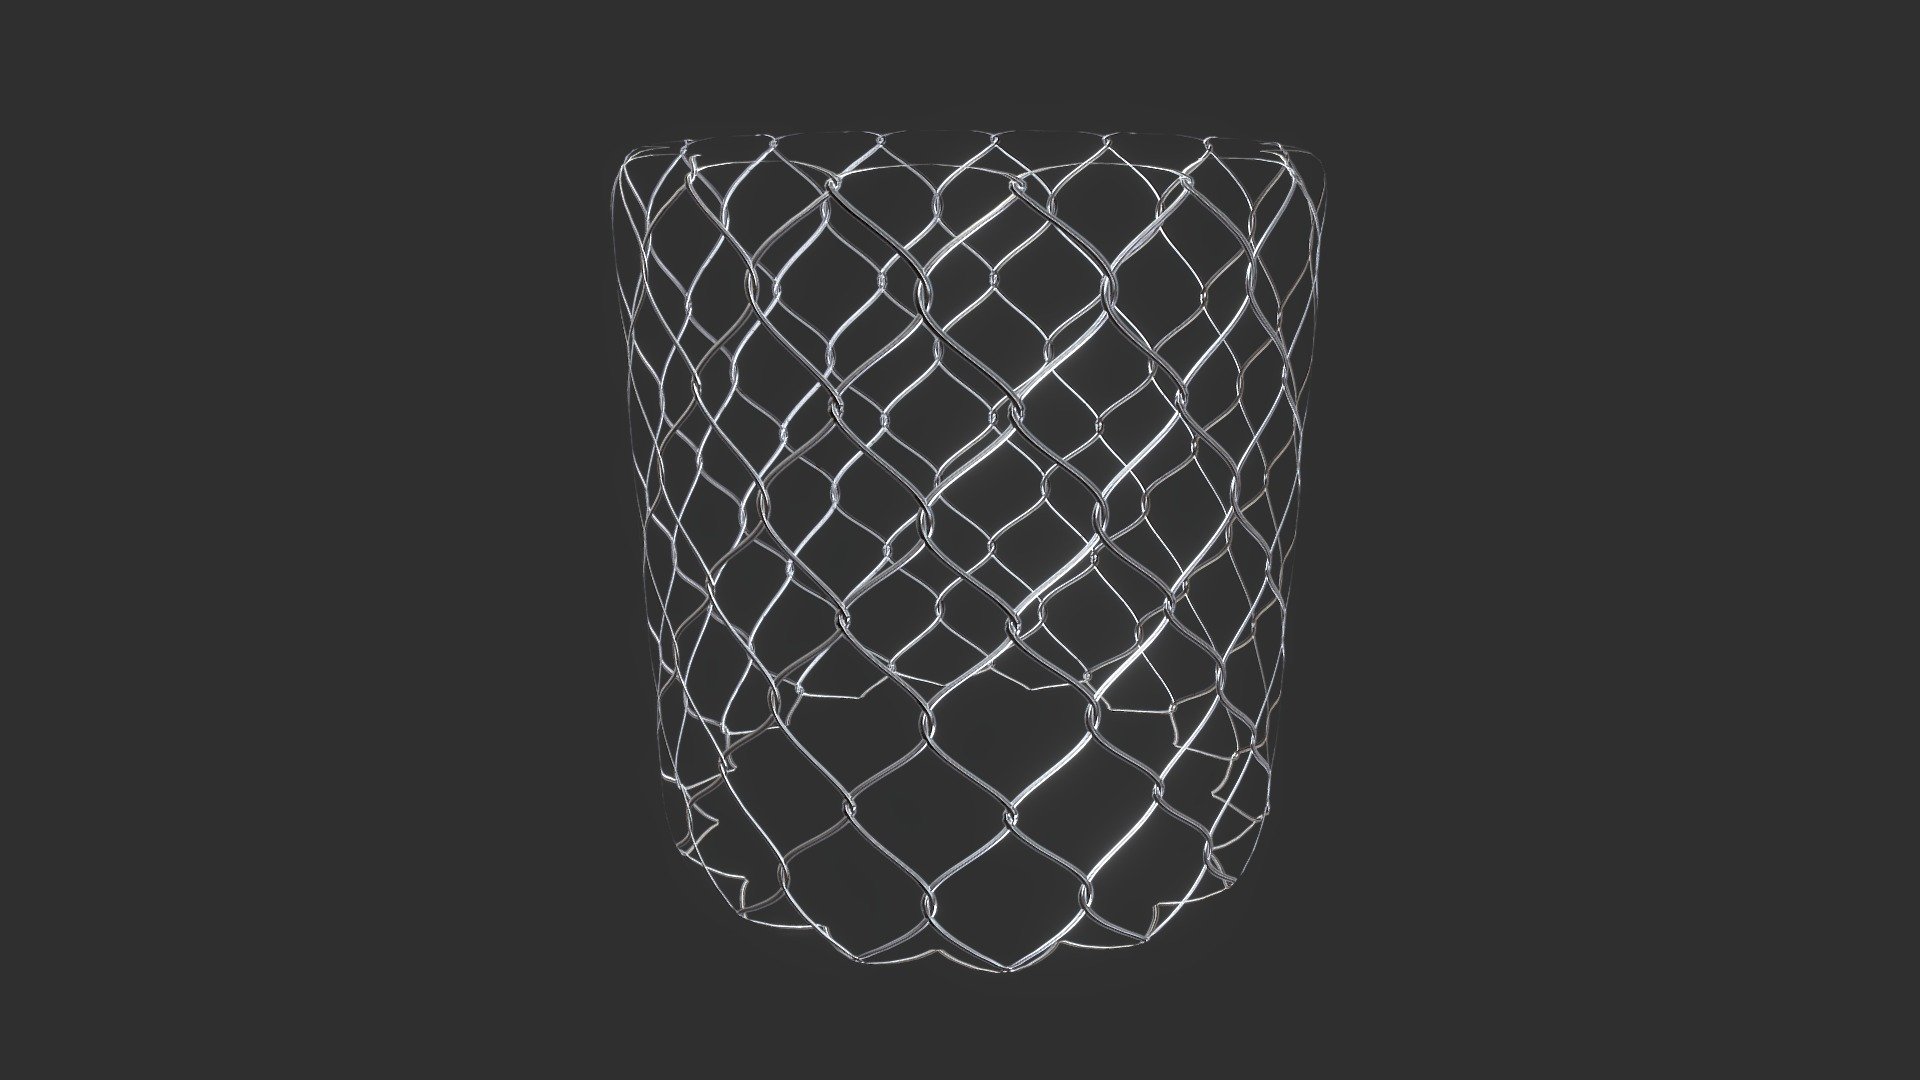 Substance Designer - Chain link fence Material